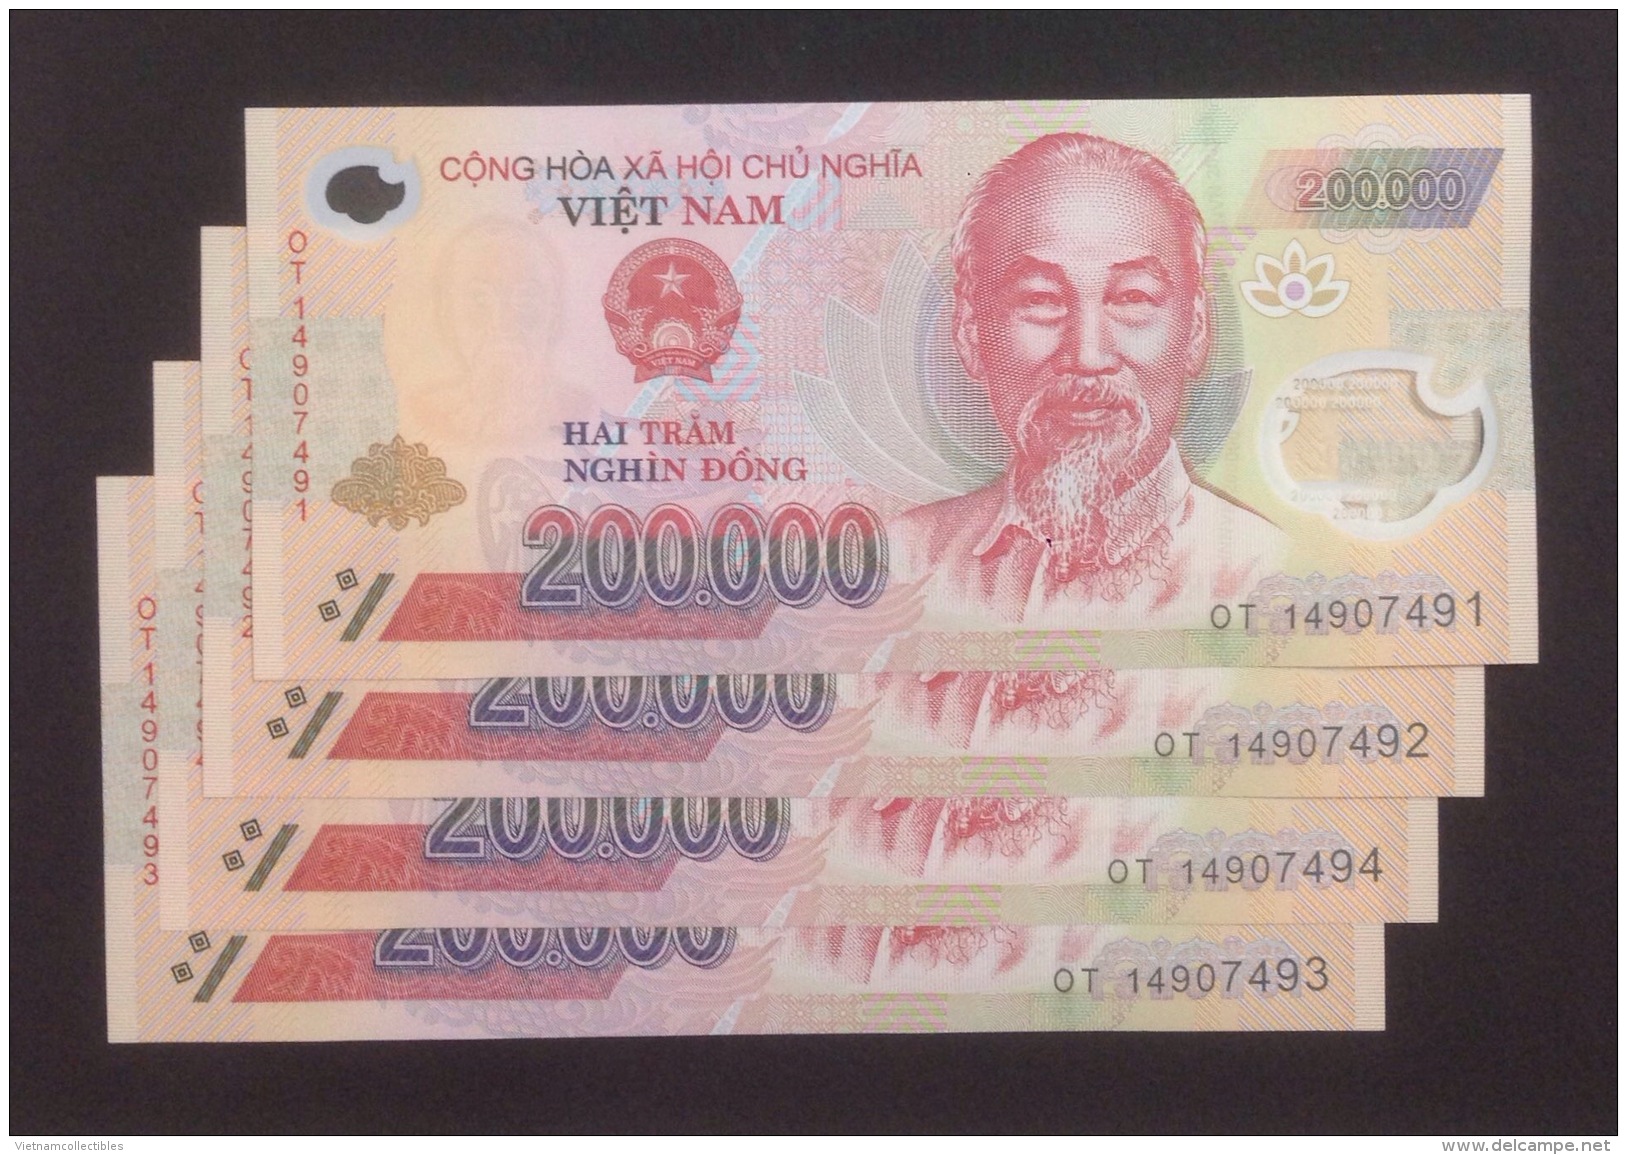 Lot Of 04 Vietnam Viet Nam 200000 Dong UNC Polymer Banknotes 2014 - Vietnam